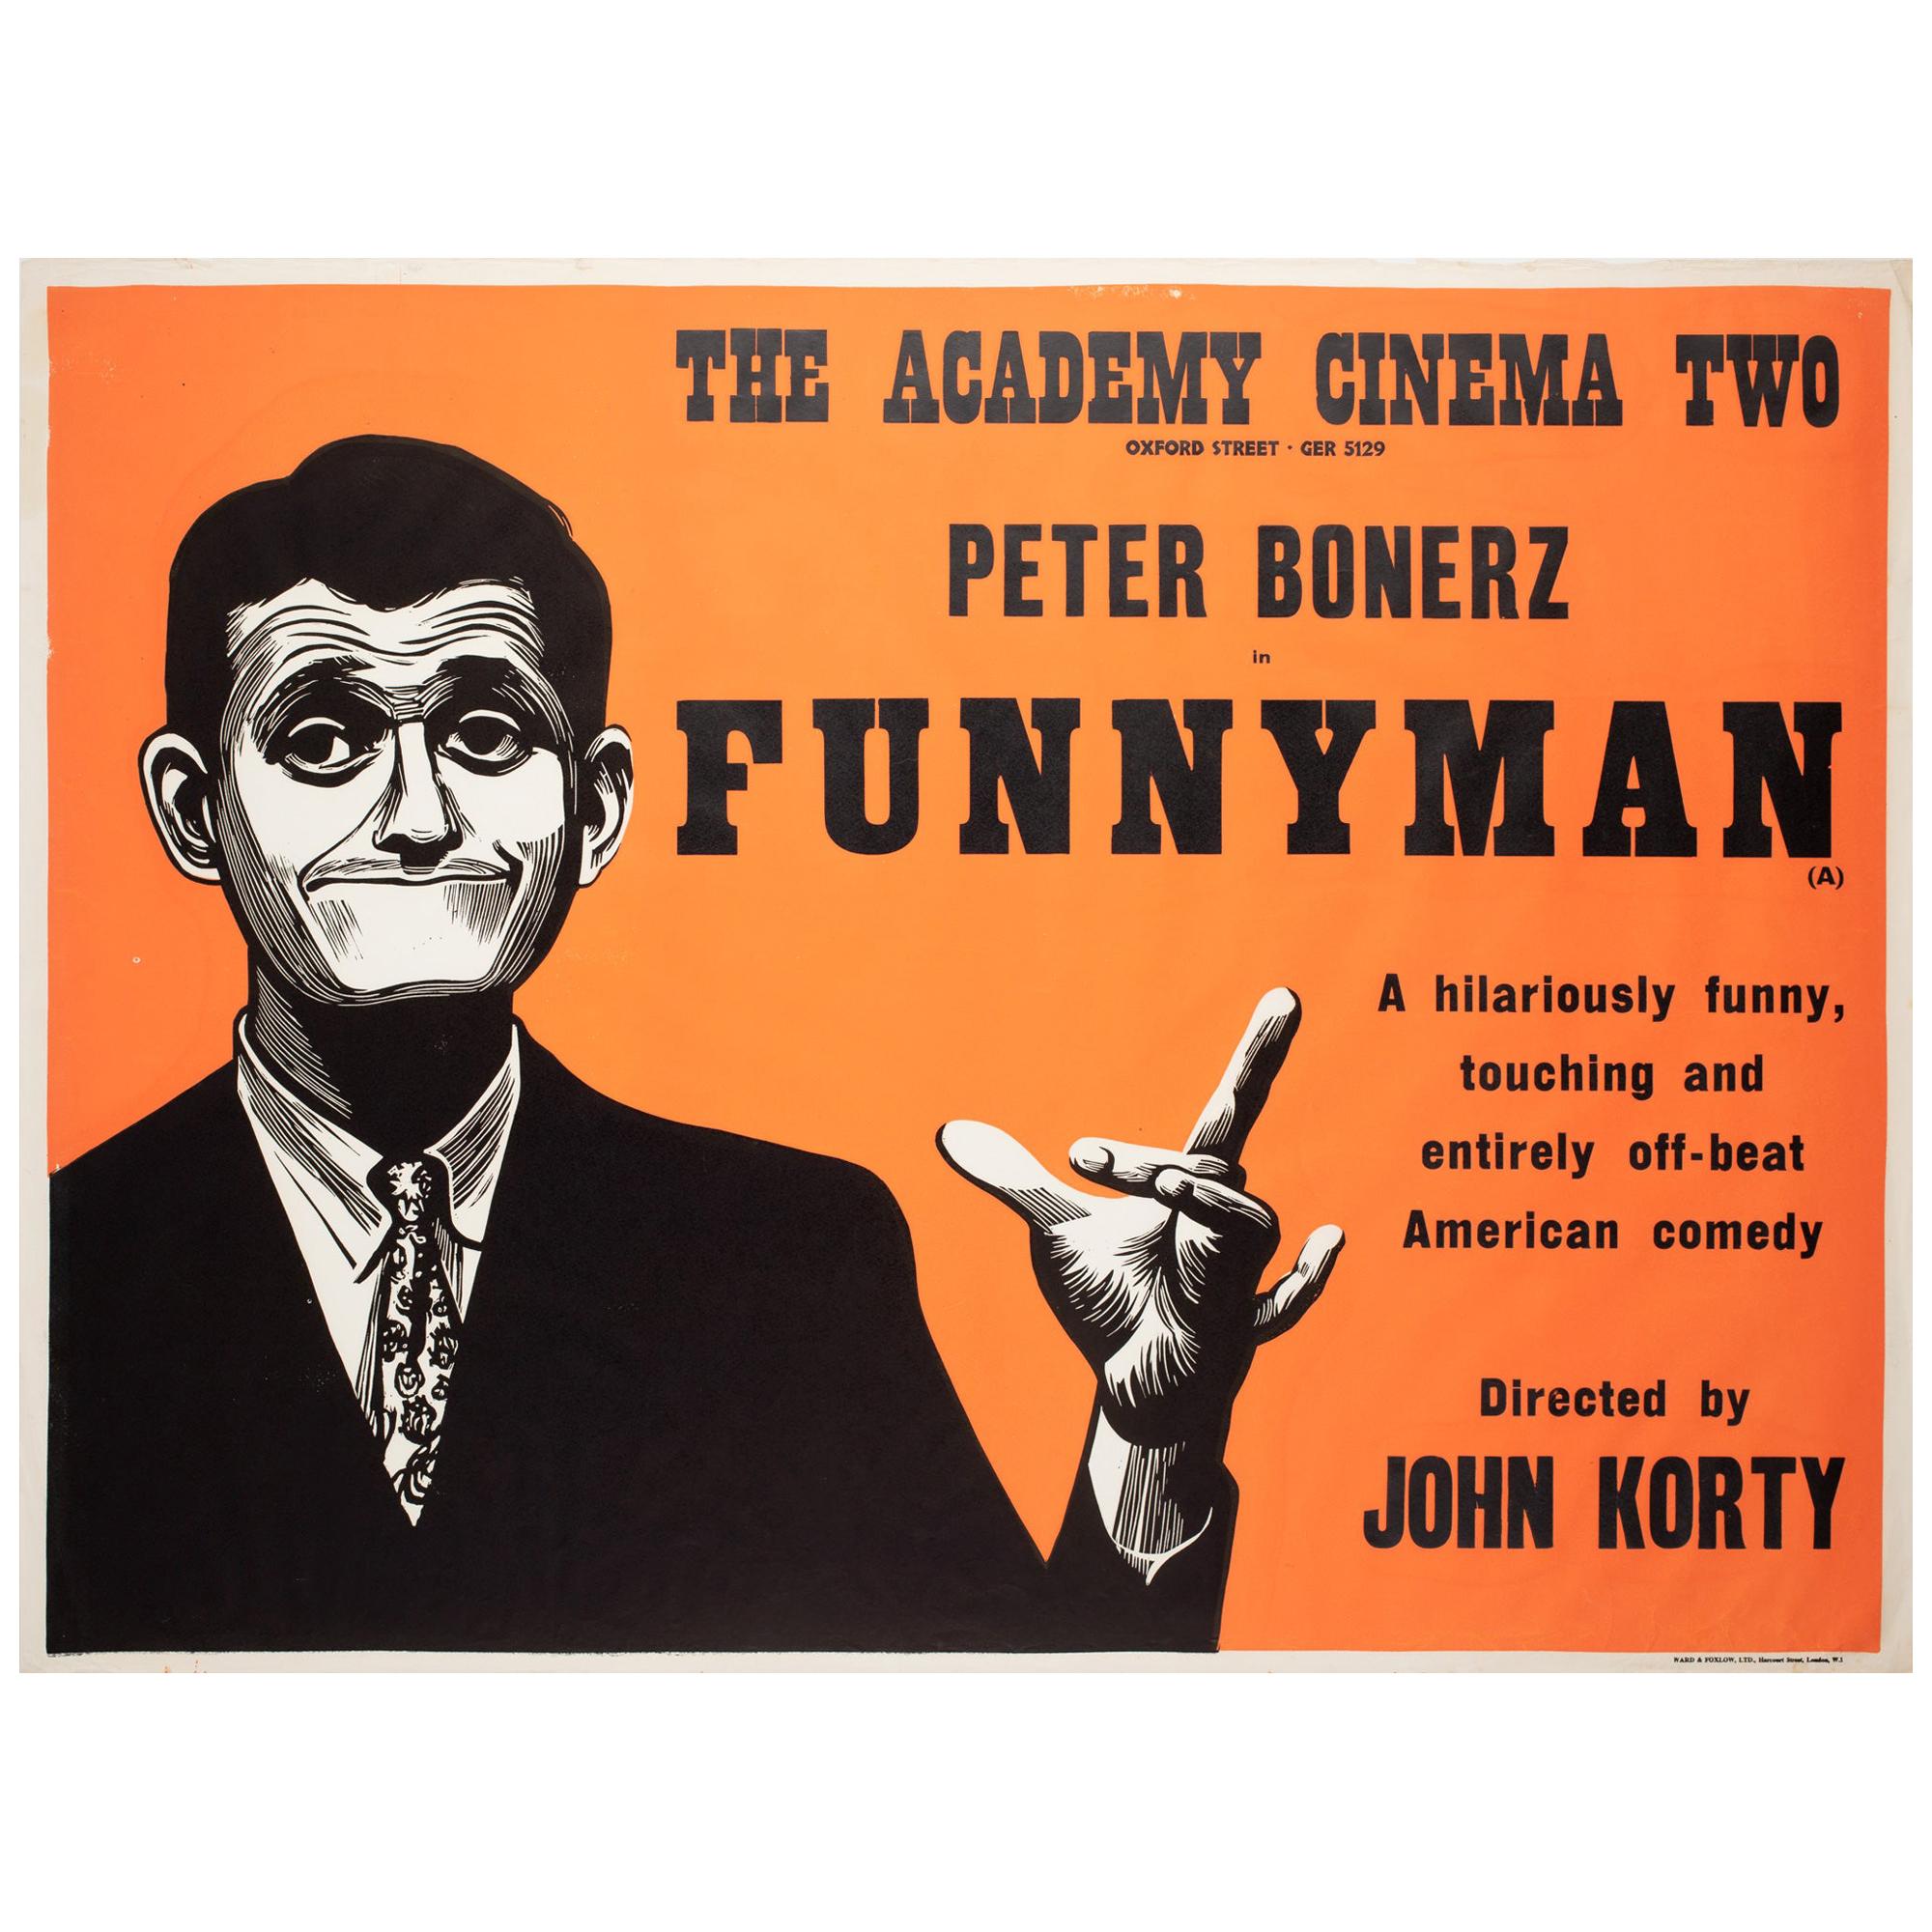 Funnyman 1968 Academy Cinema UK Quad Filmplakat, Strausfeld